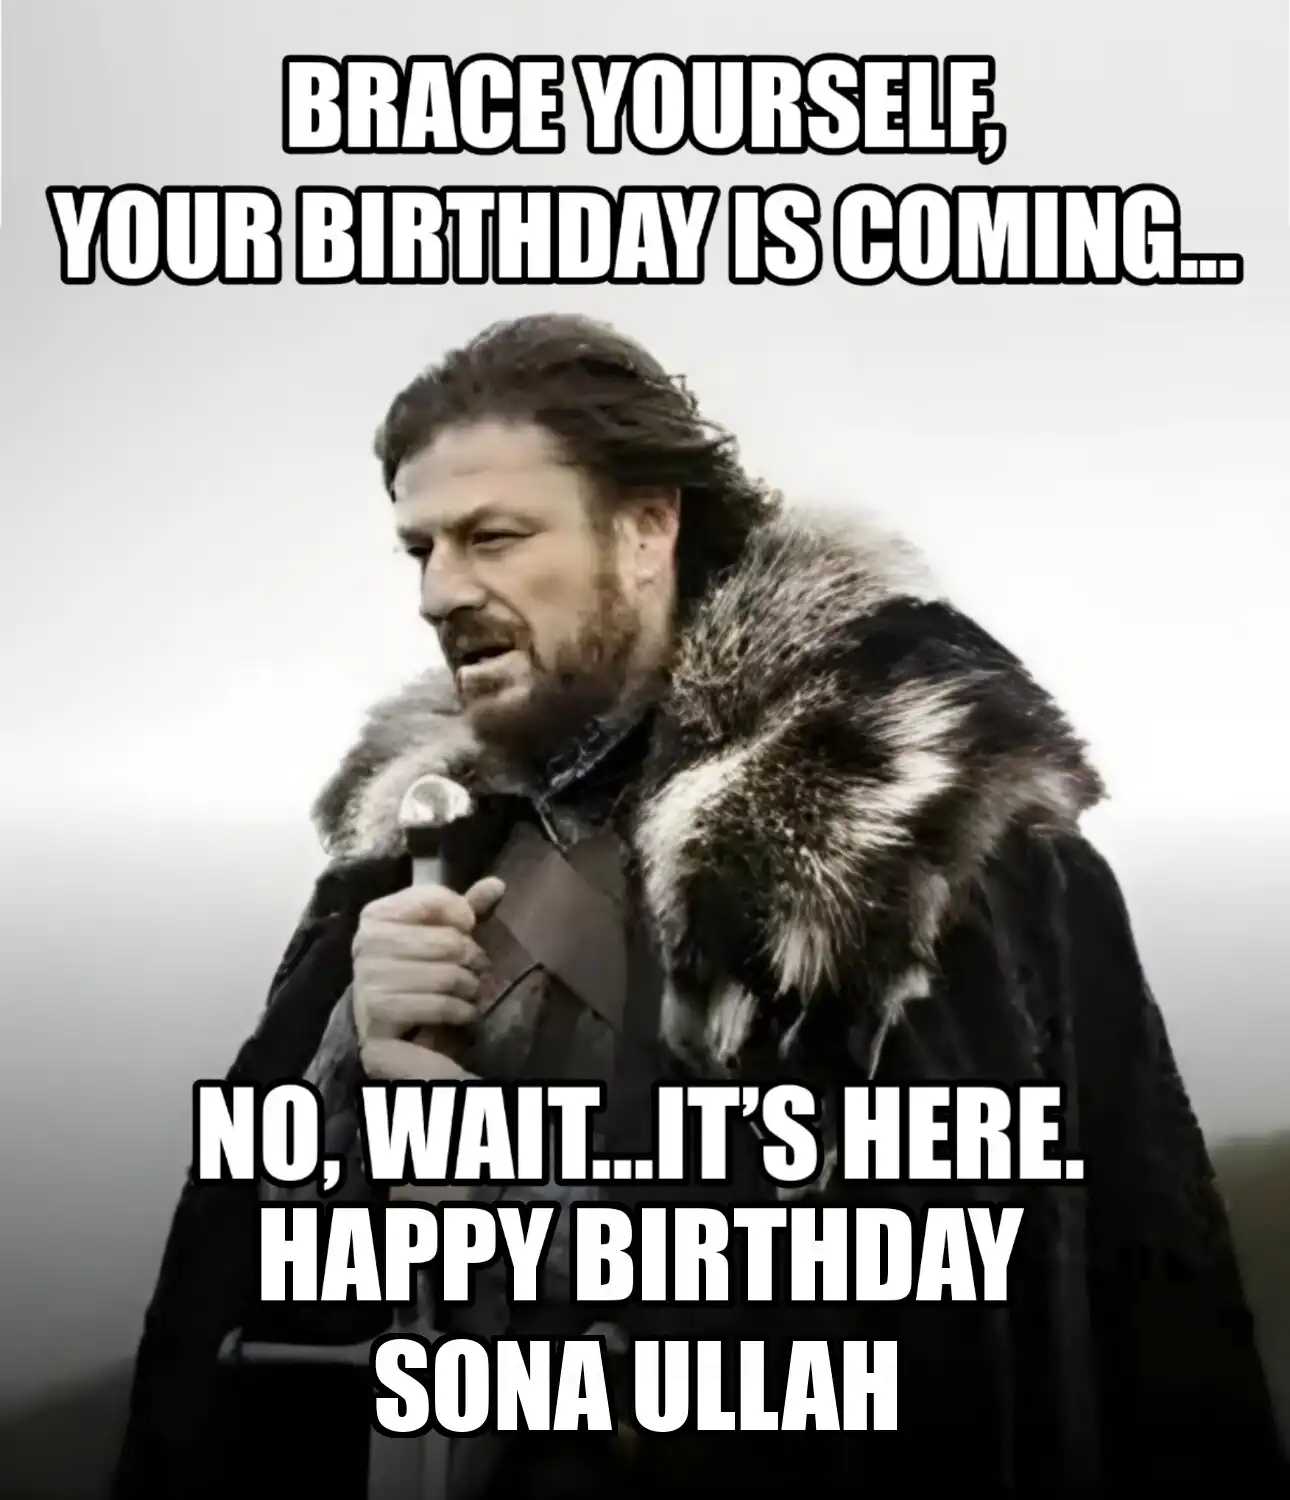 Happy Birthday Sona Ullah Brace Yourself Your Birthday Is Coming Meme